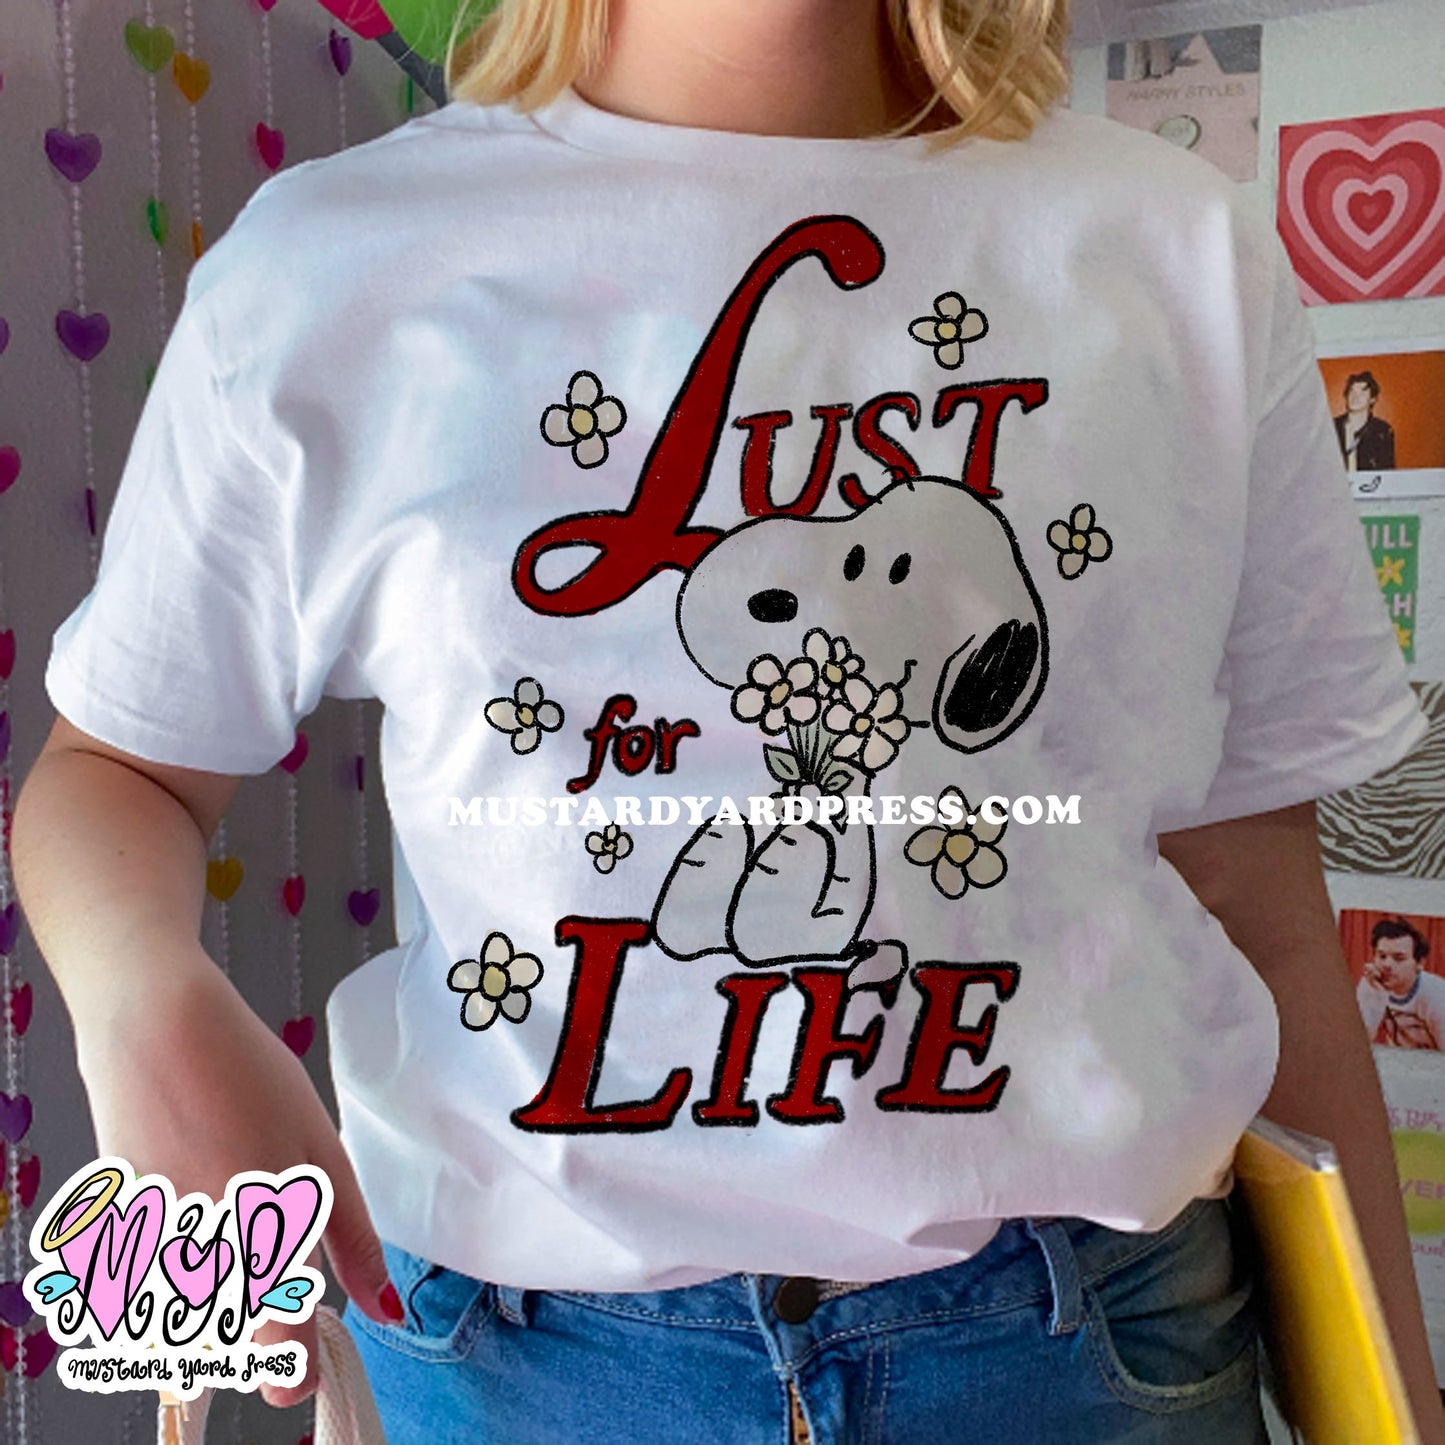 lust for life dog t-shirt